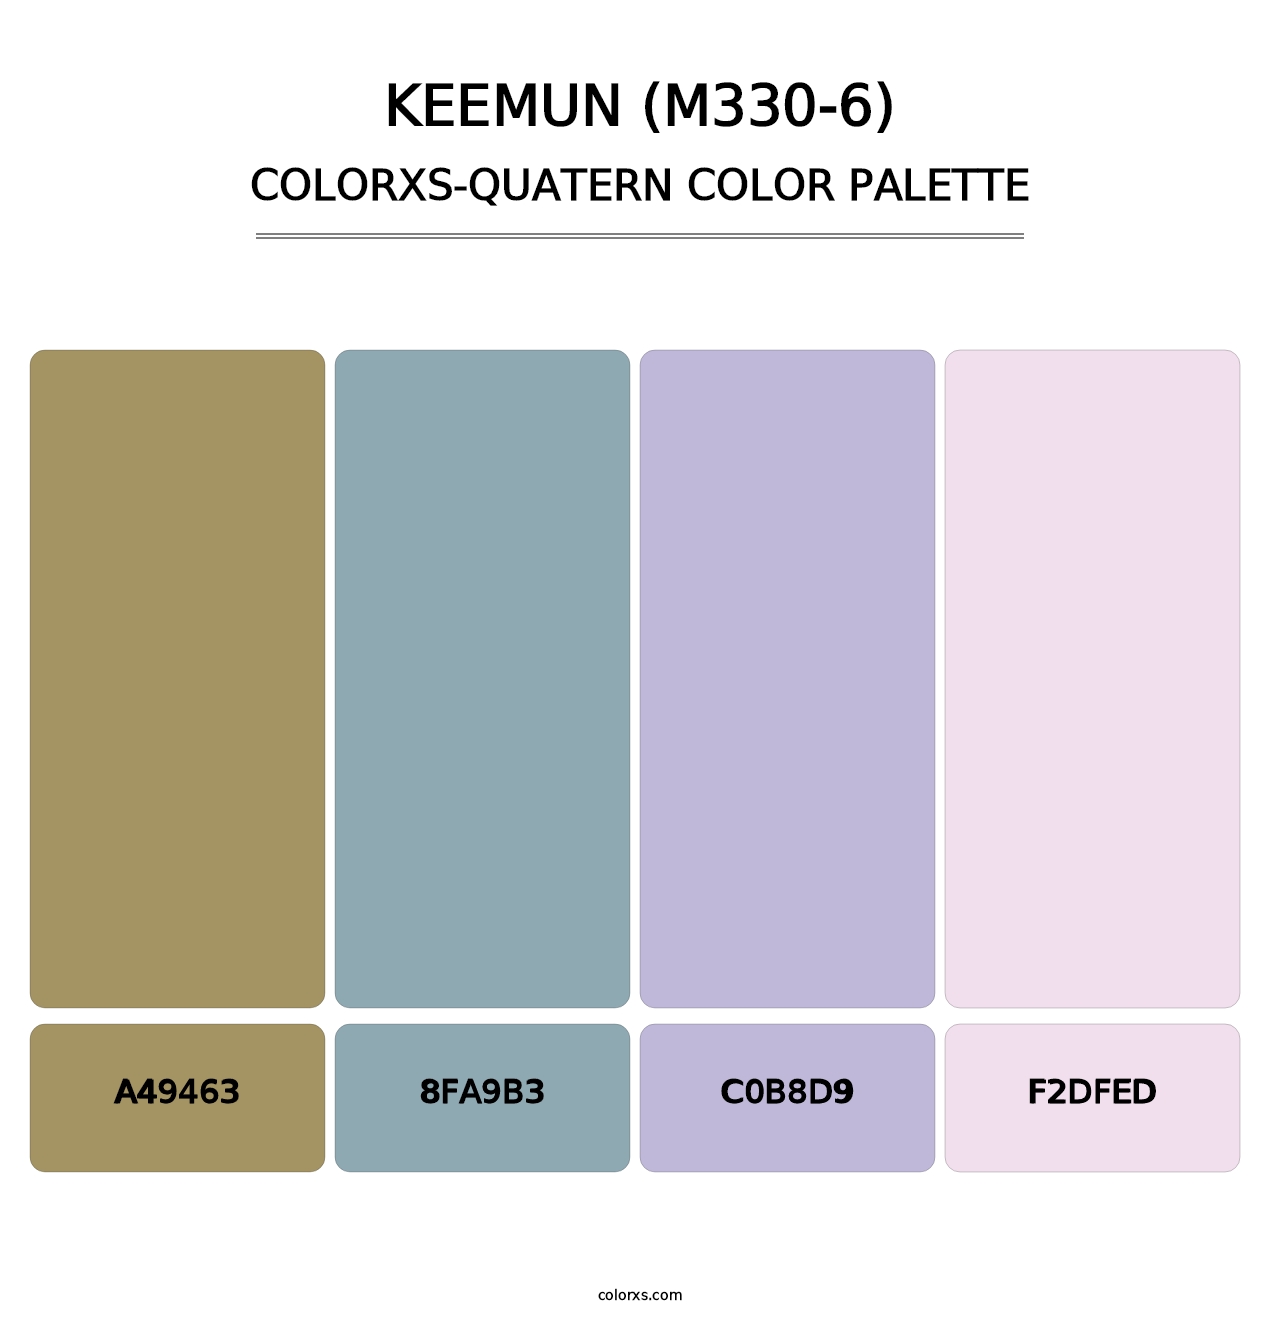 Keemun (M330-6) - Colorxs Quatern Palette